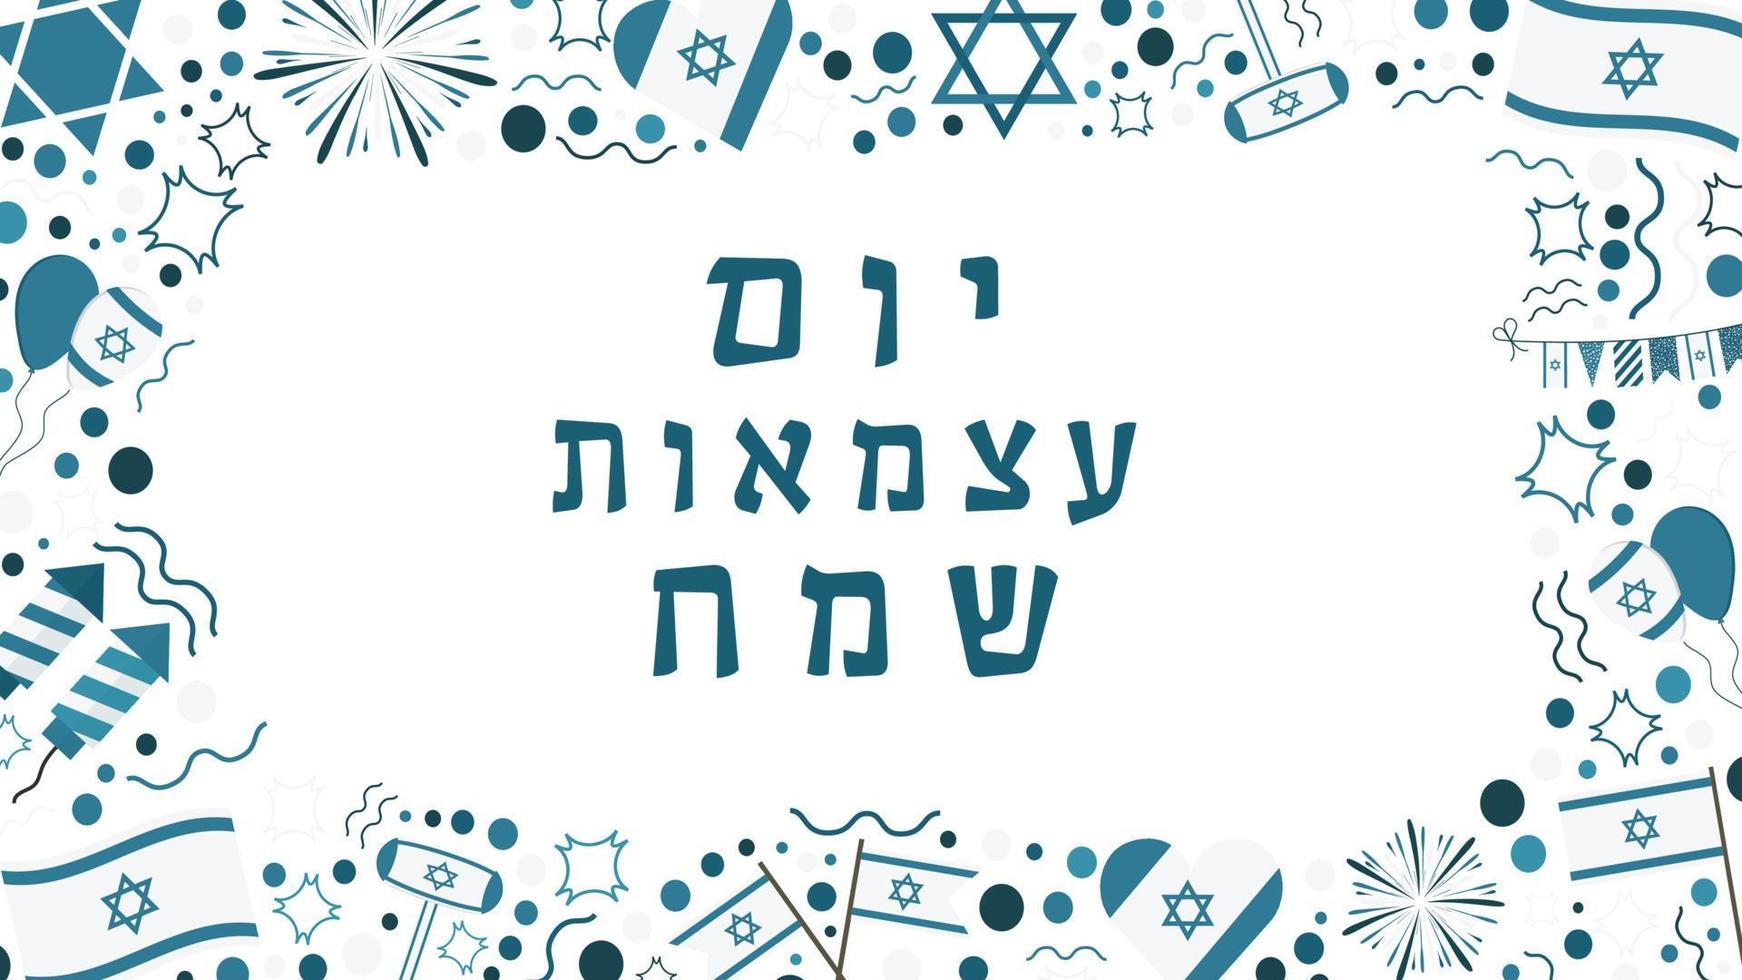 cadre avec des icônes du design plat de vacances de la fête de l'indépendance d'israël avec du texte en hébreu vecteur